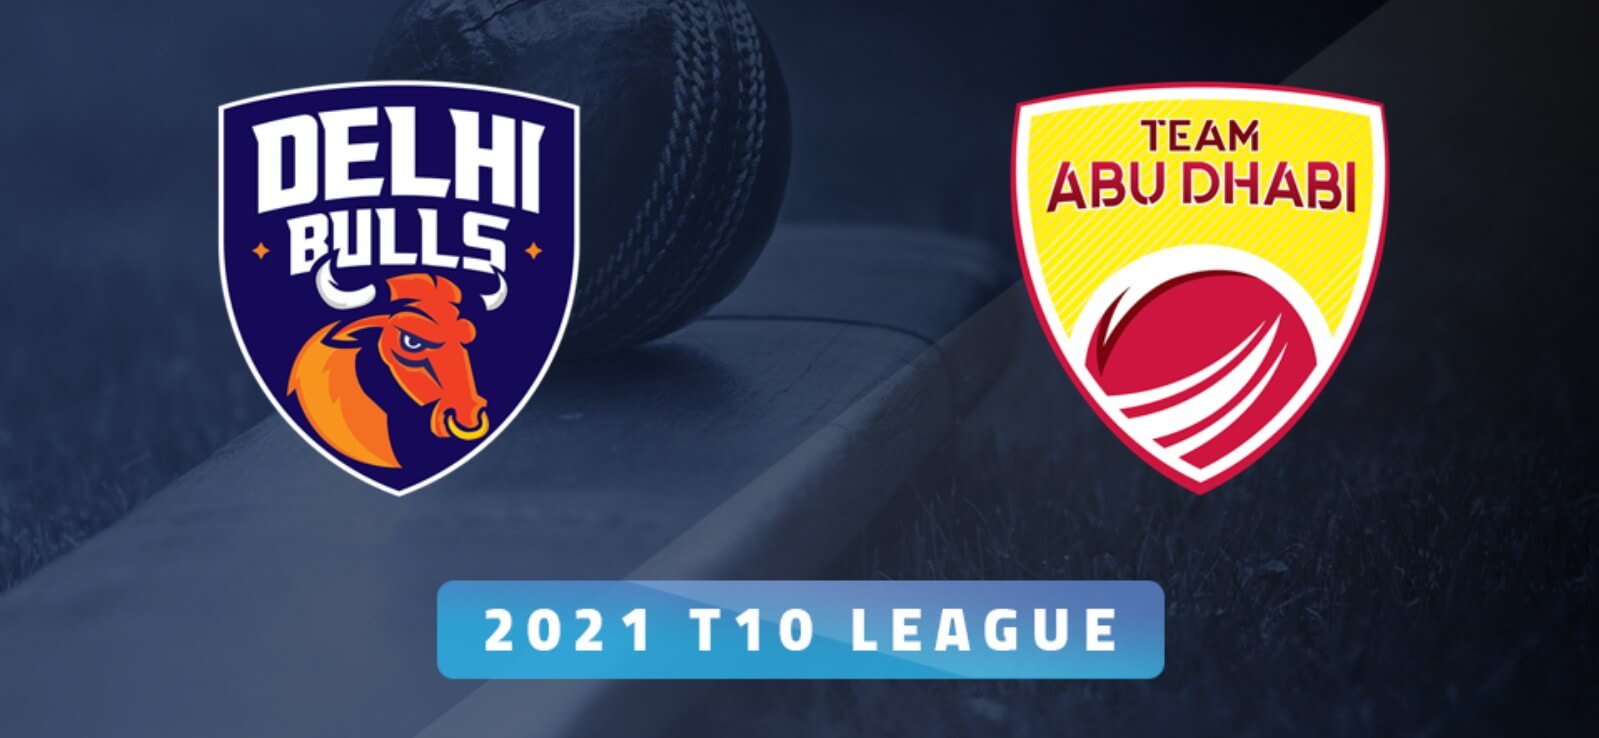 Abu Dhabi T10 LIVE: Preview, Squad News, Head to Head stats and Dream11 Prediction for Team Abu Dhabi vs Delhi Bulls